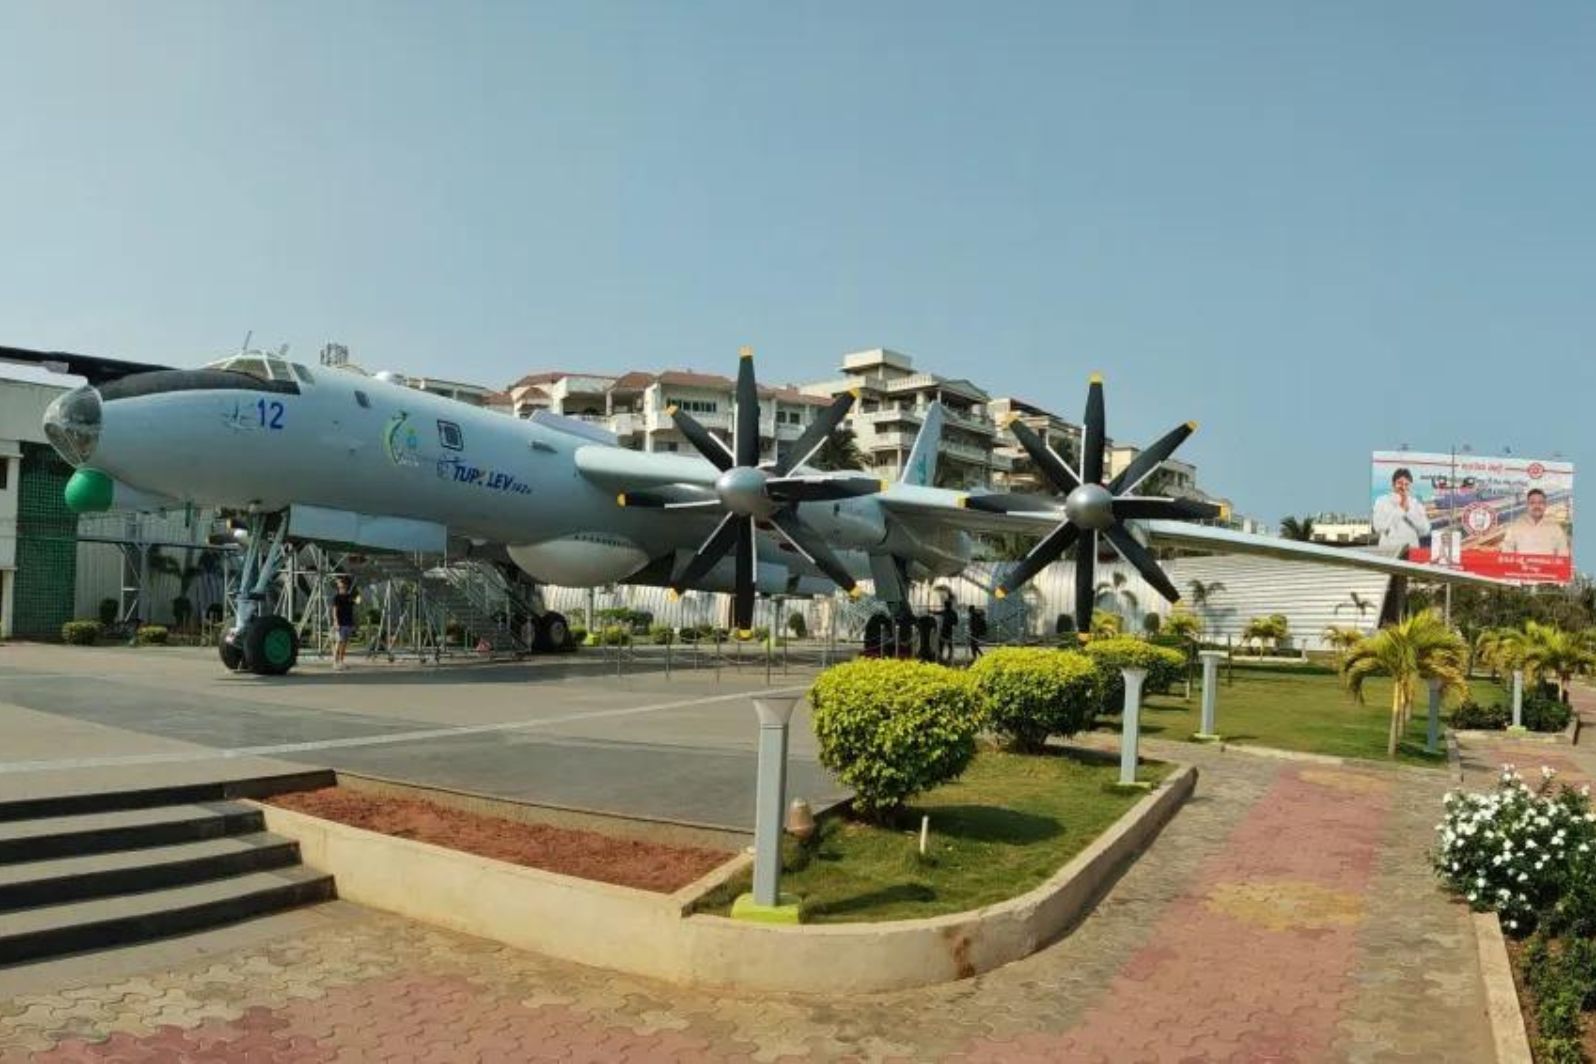 tu 142 aircraft museum andhra pradesh